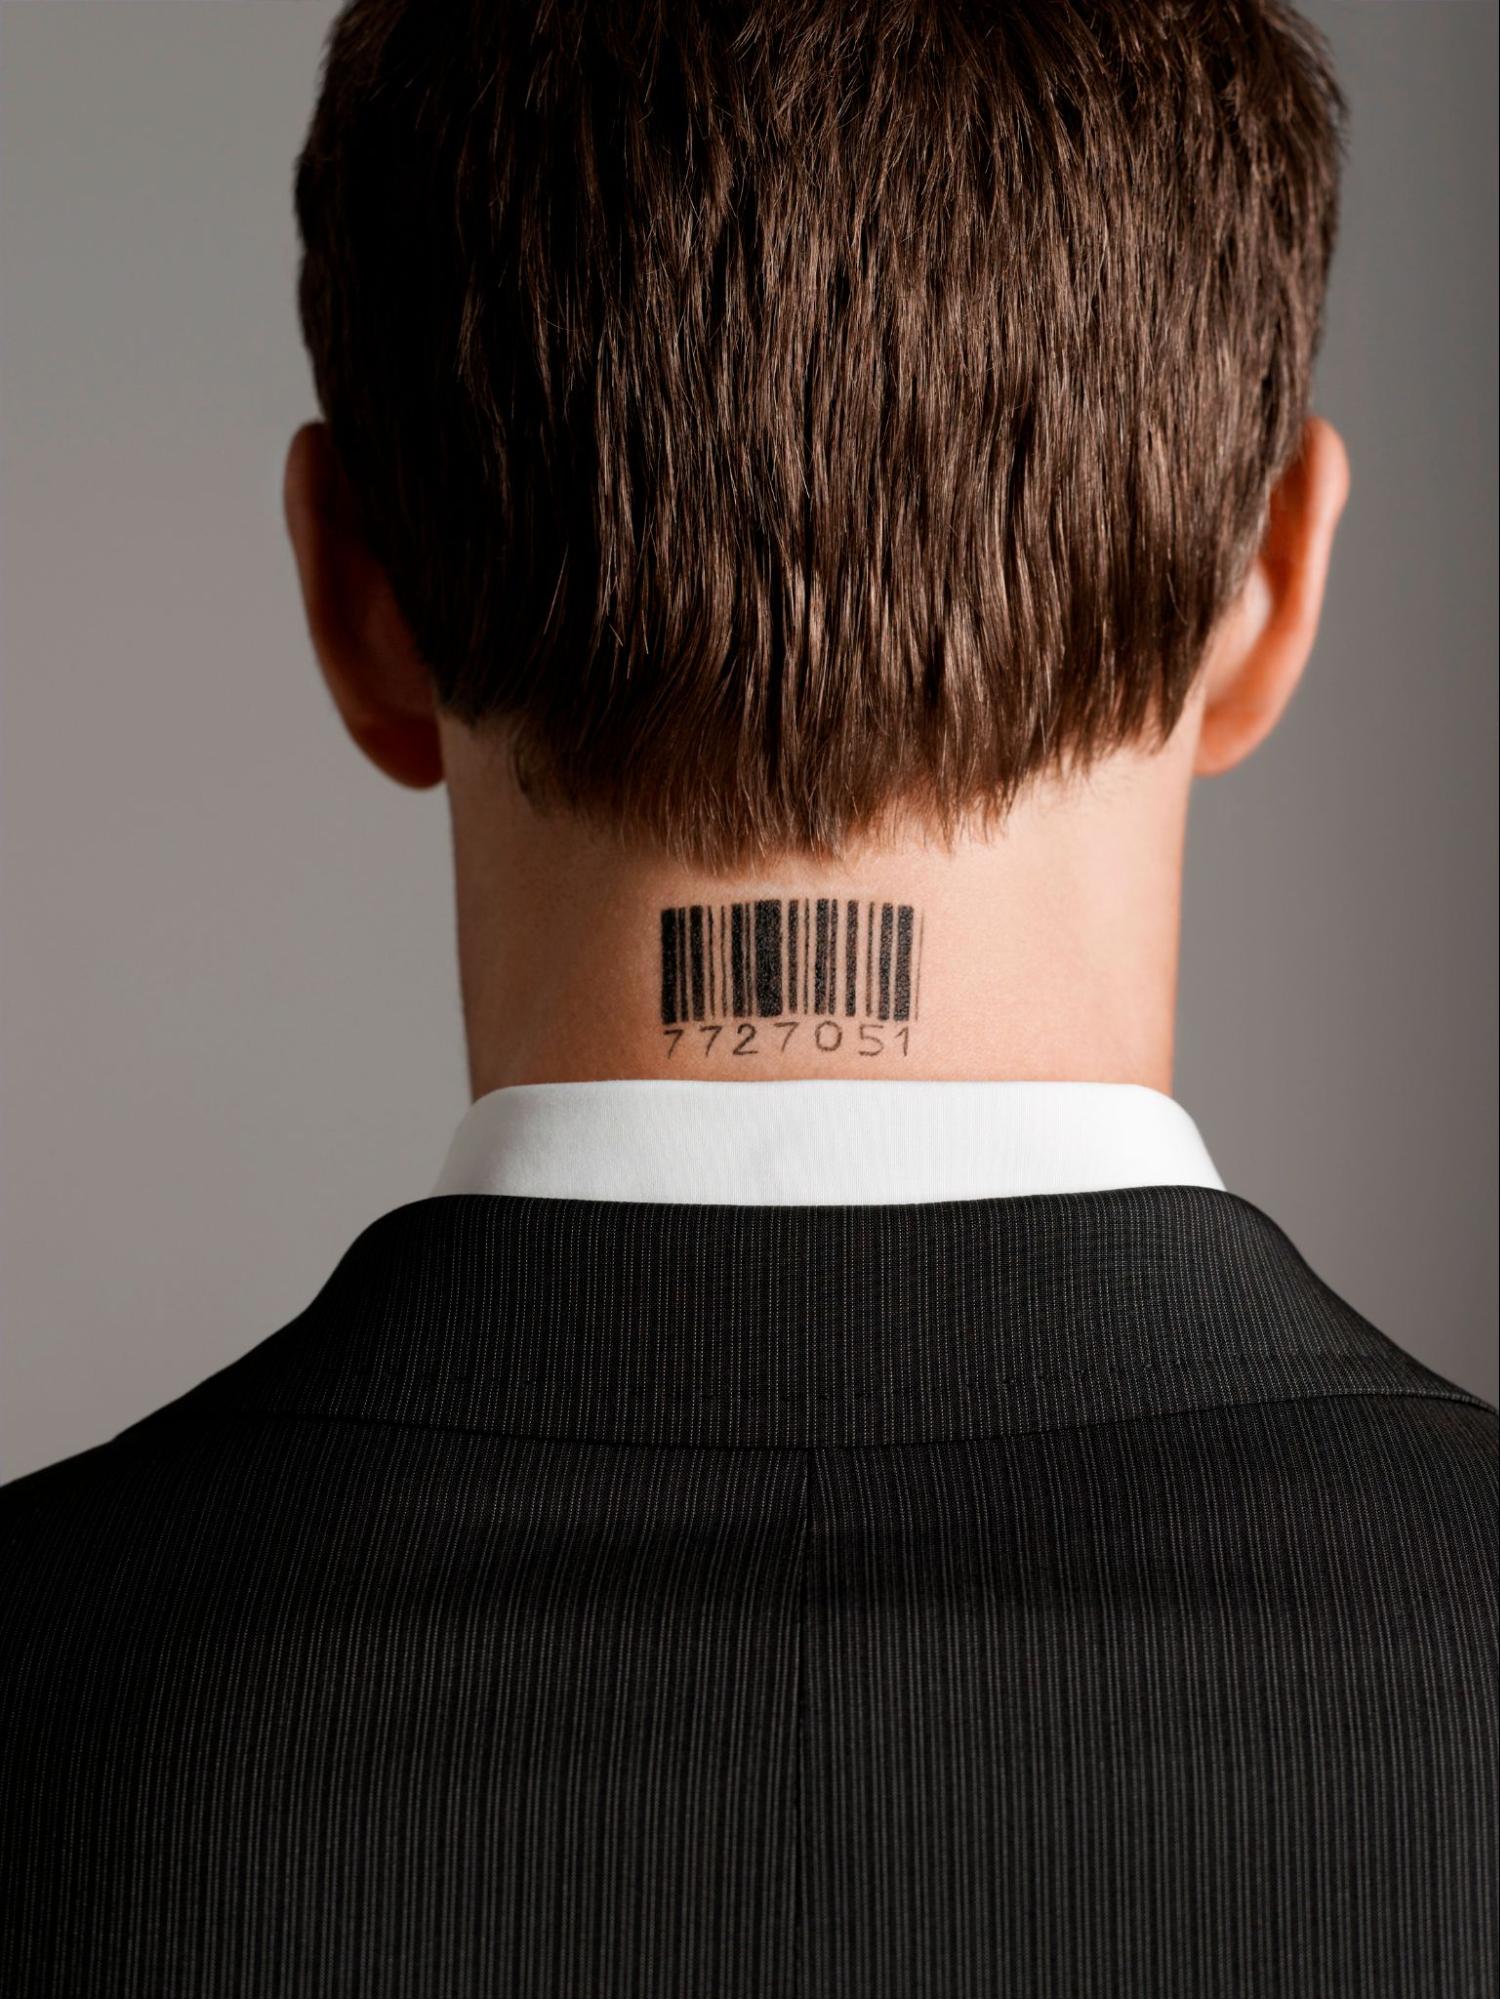 man wearing a barcode tattoo